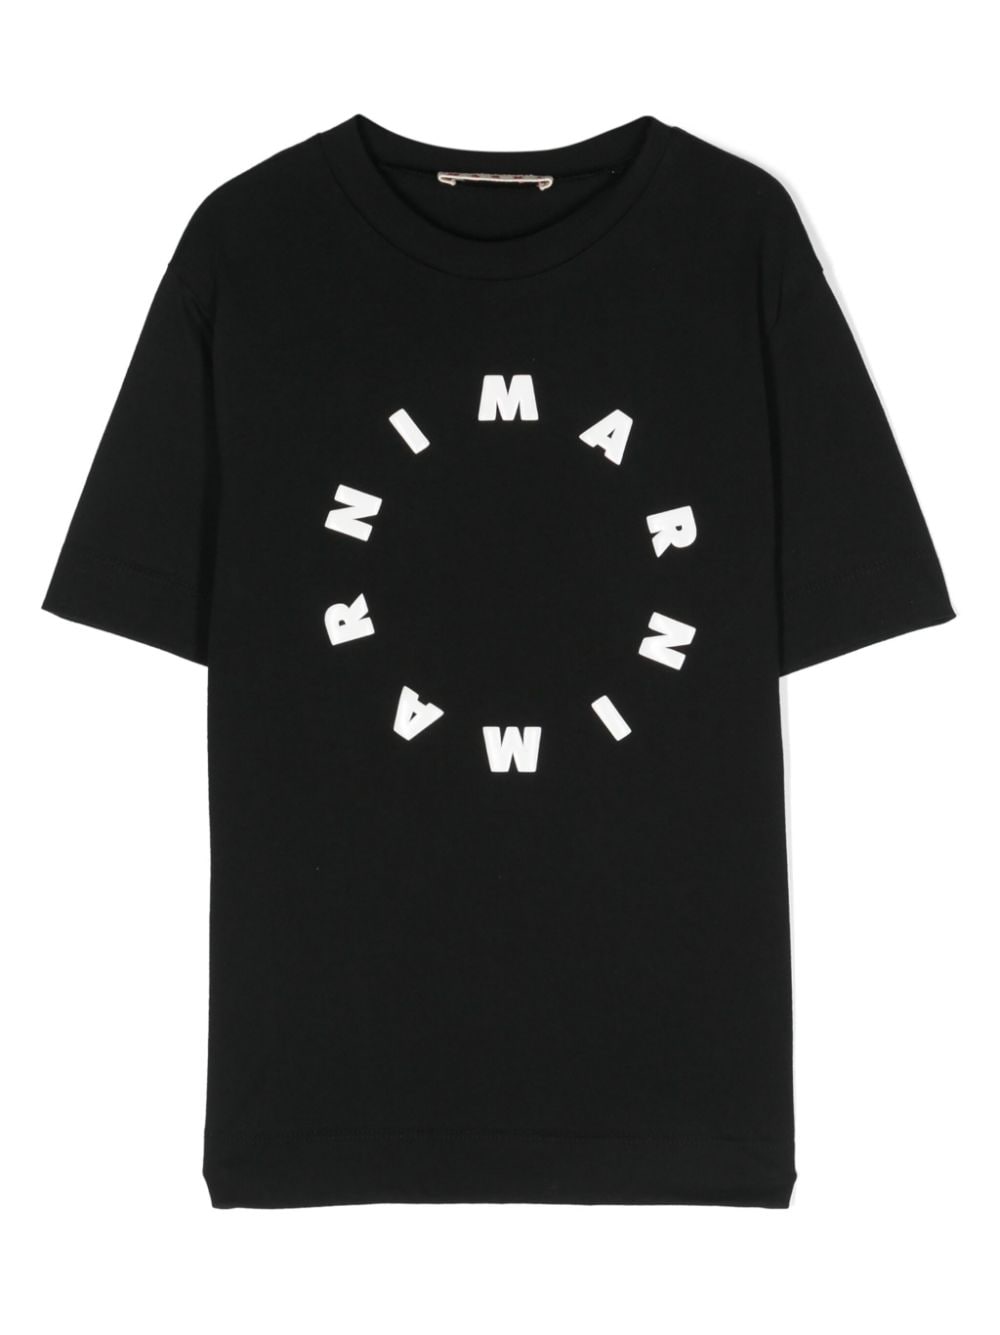 Black logo-raised T-shirt<BR/><BR/><BR/>